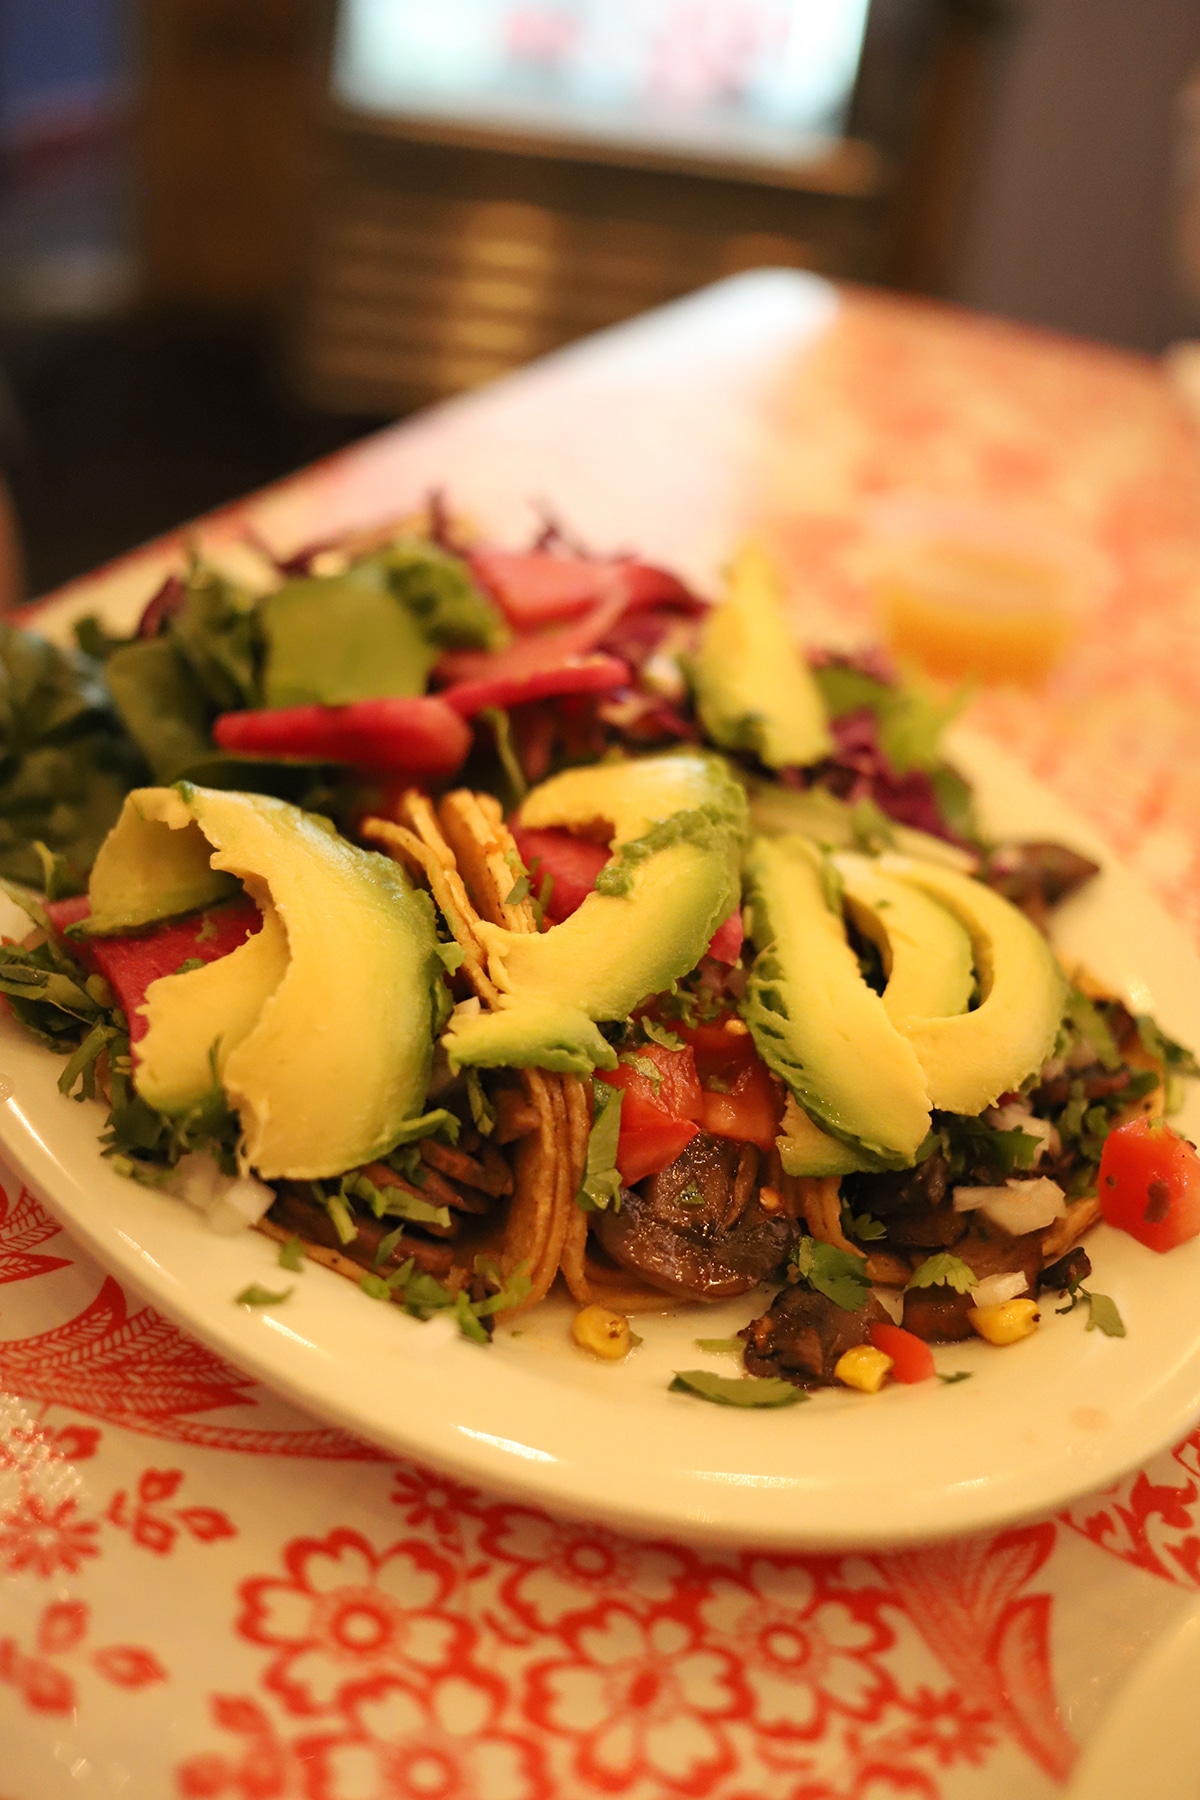 Mushroom tacos with salad.